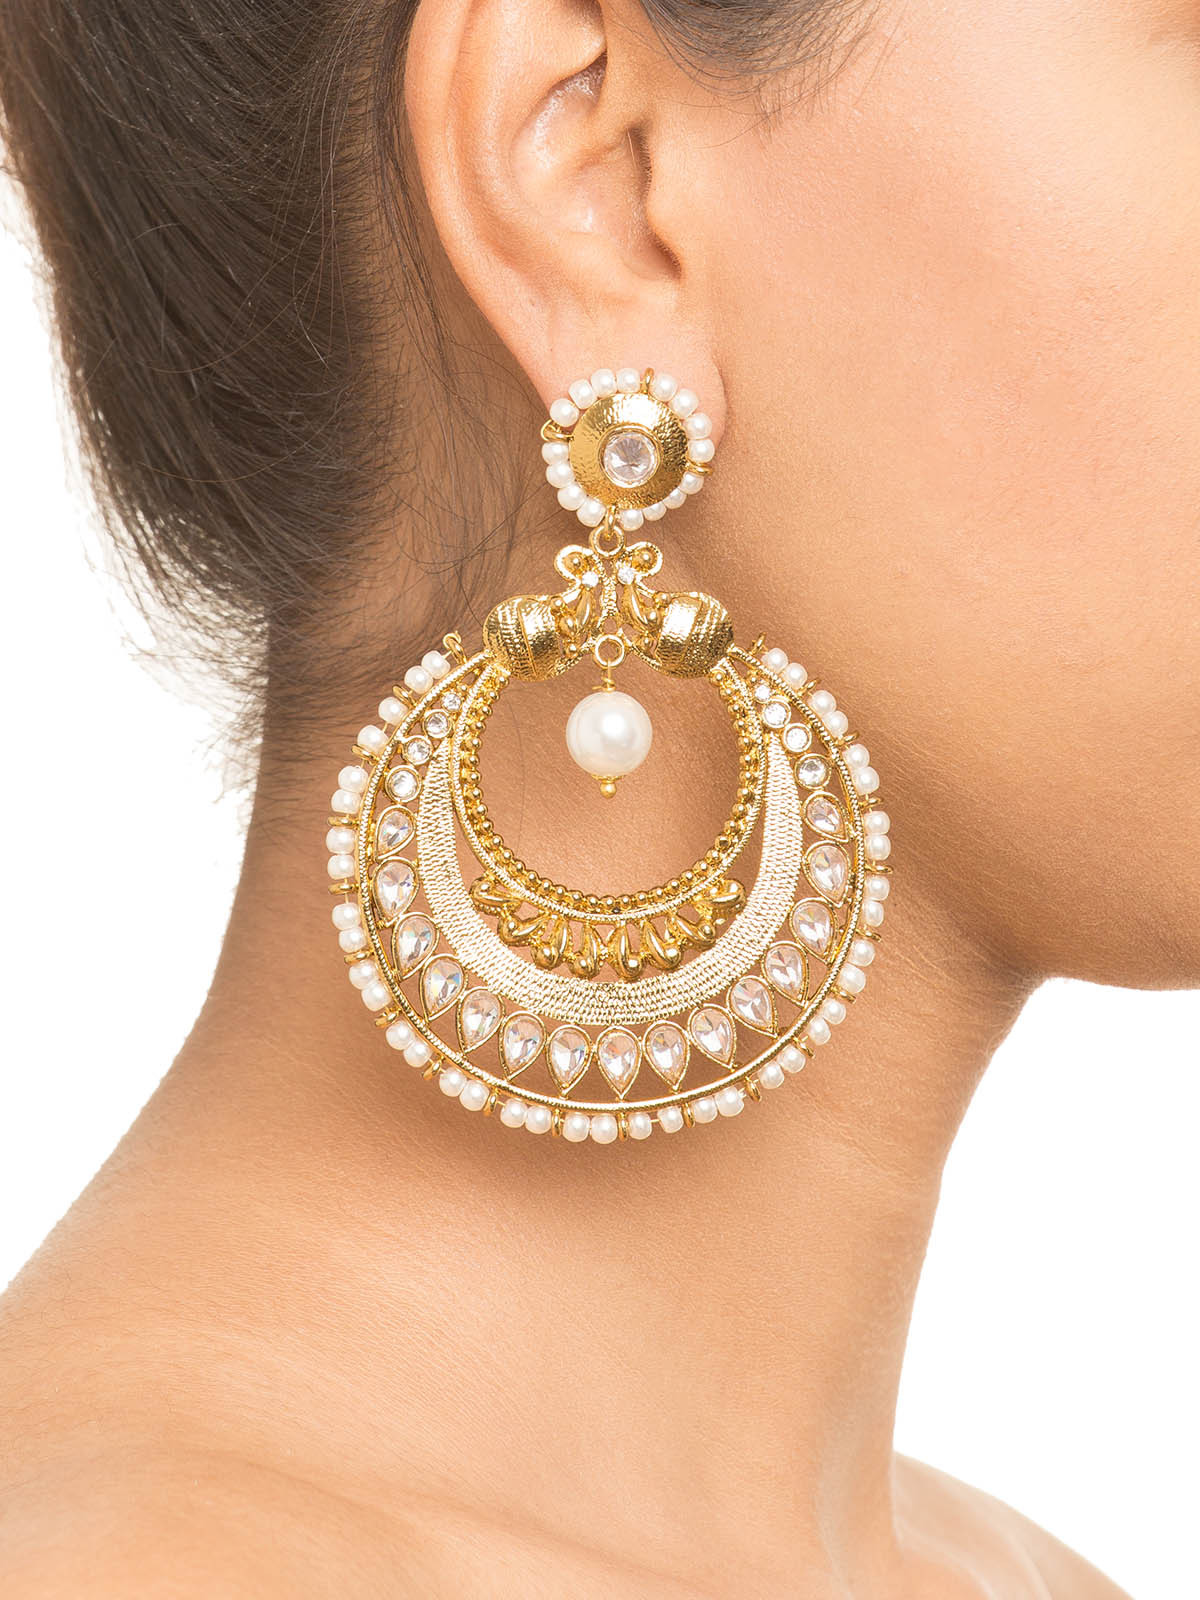 Big Gold Earrings
 Buy Big Gold Baala Earrings by Shillpa Purii at Jivaana